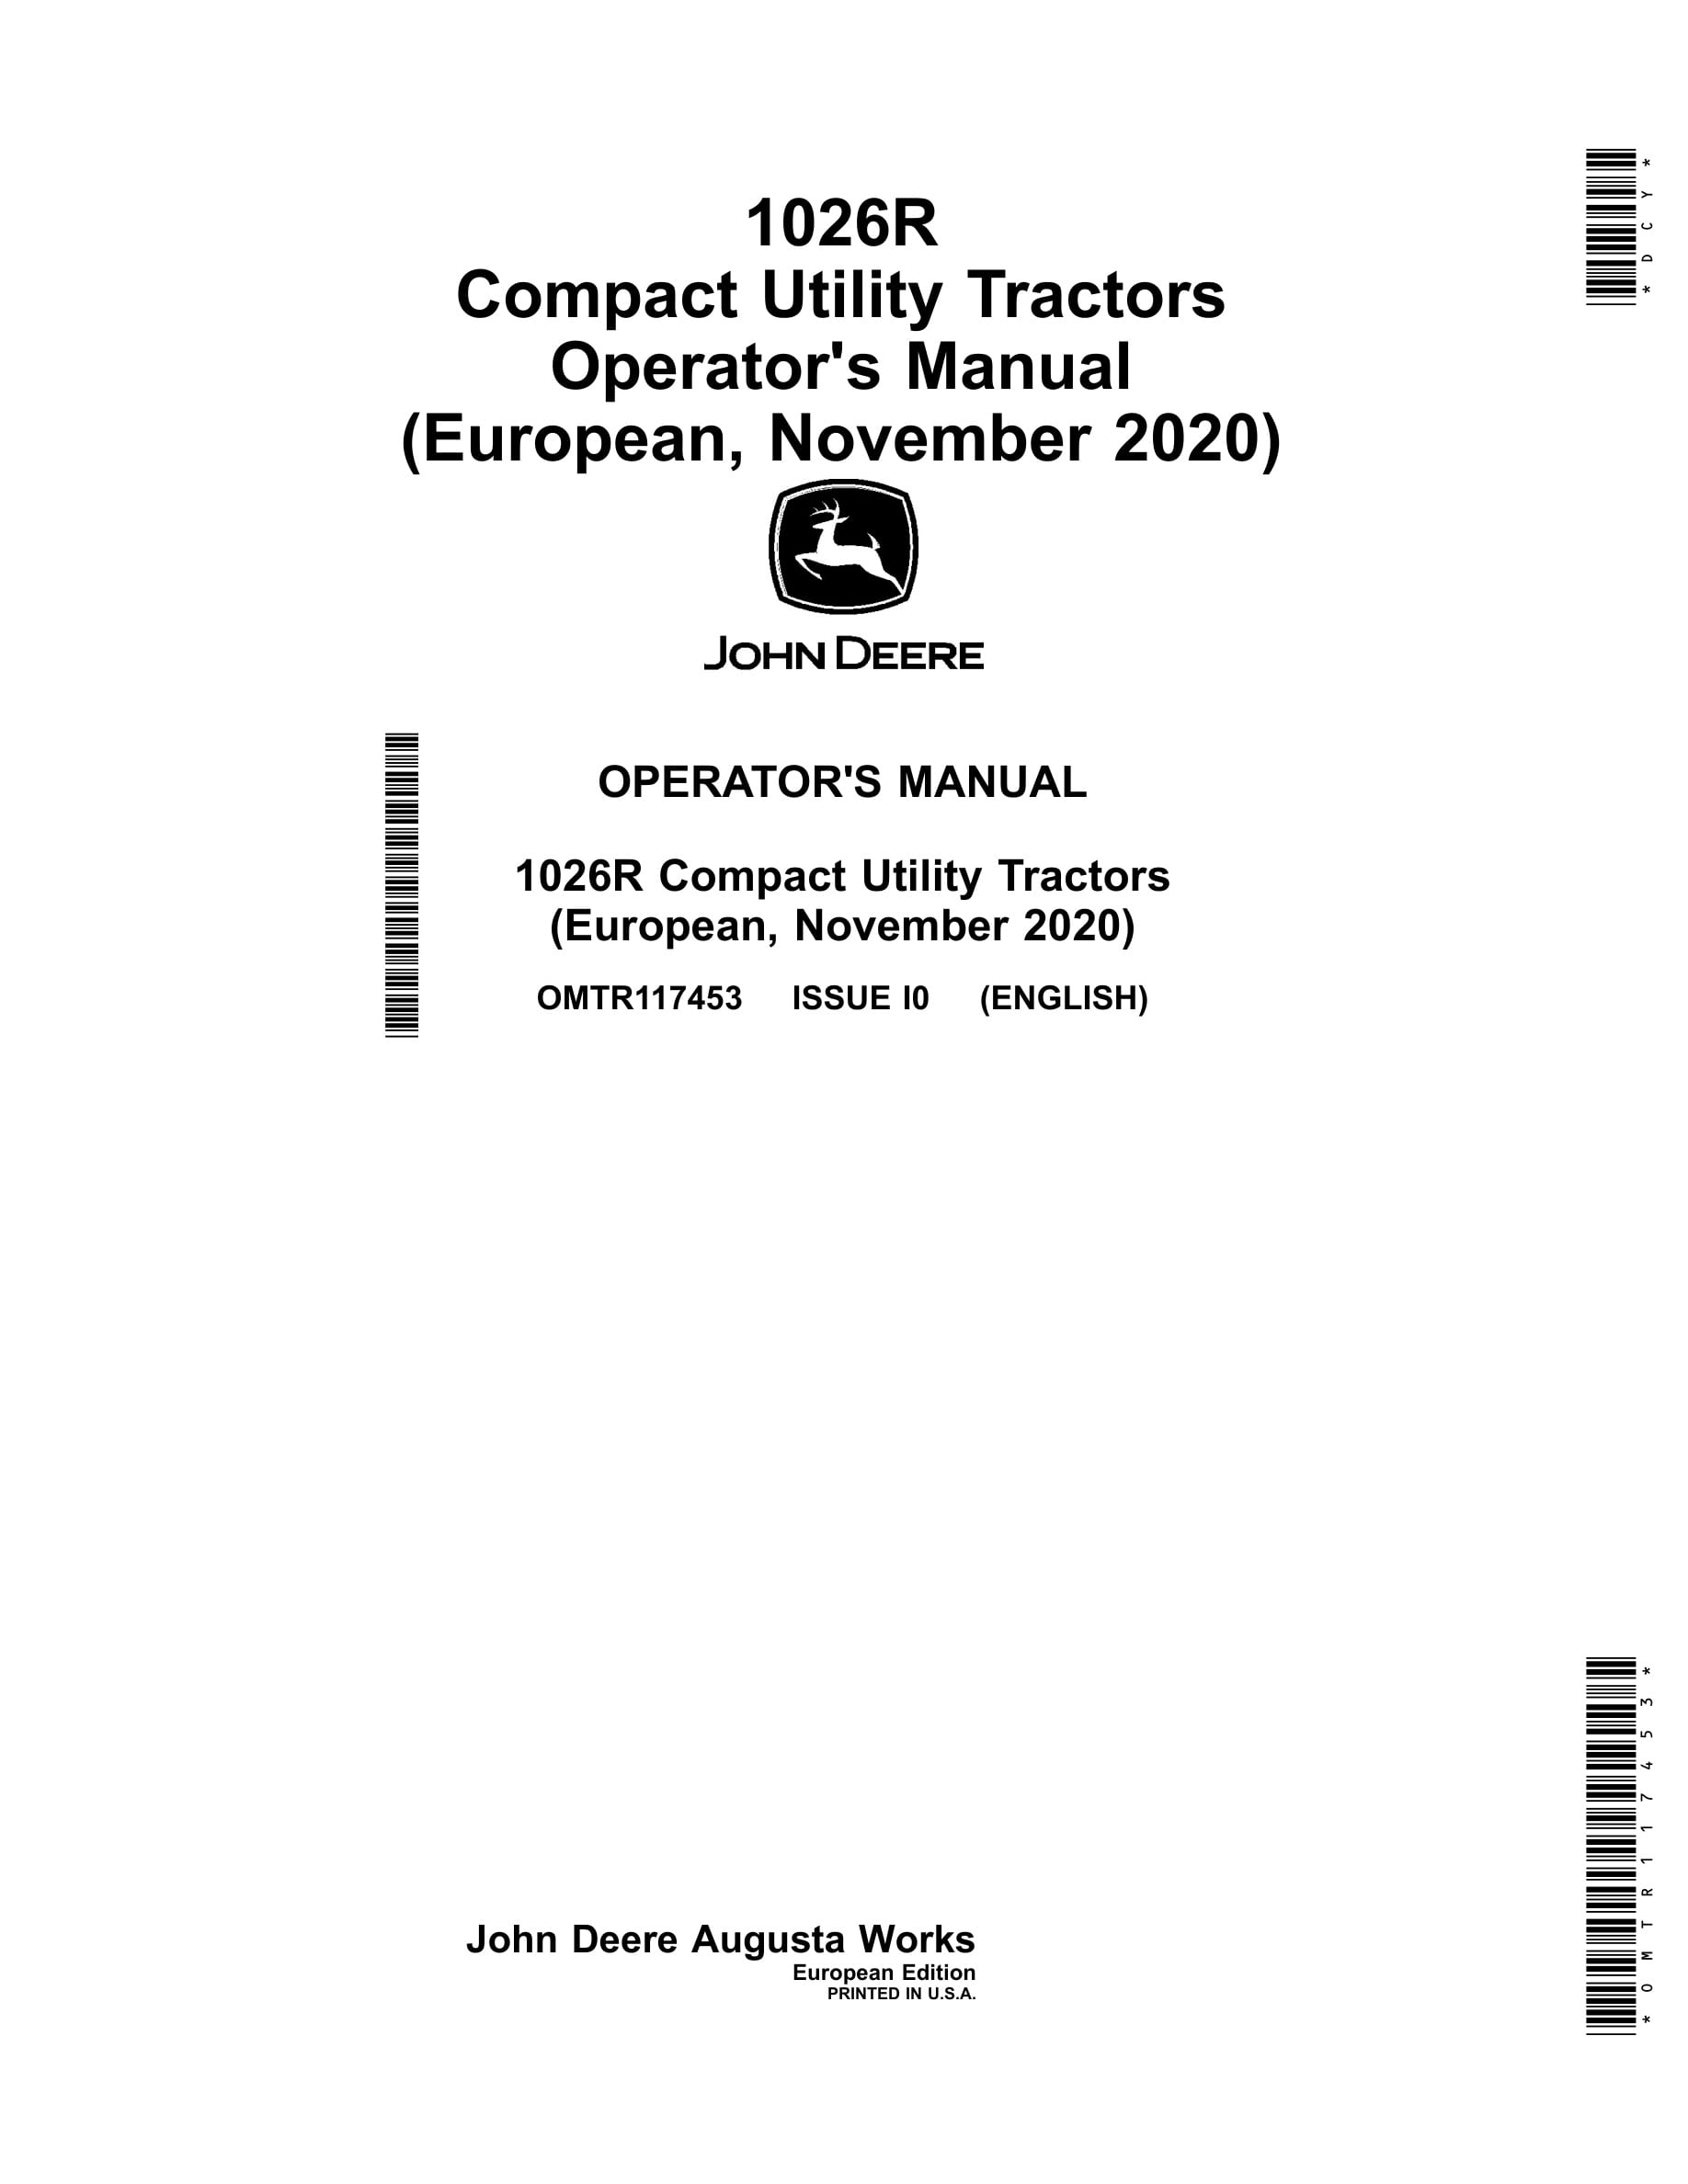 John Deere 1026r Compact Utility Tractors Operator Manuals OMTR117453-1